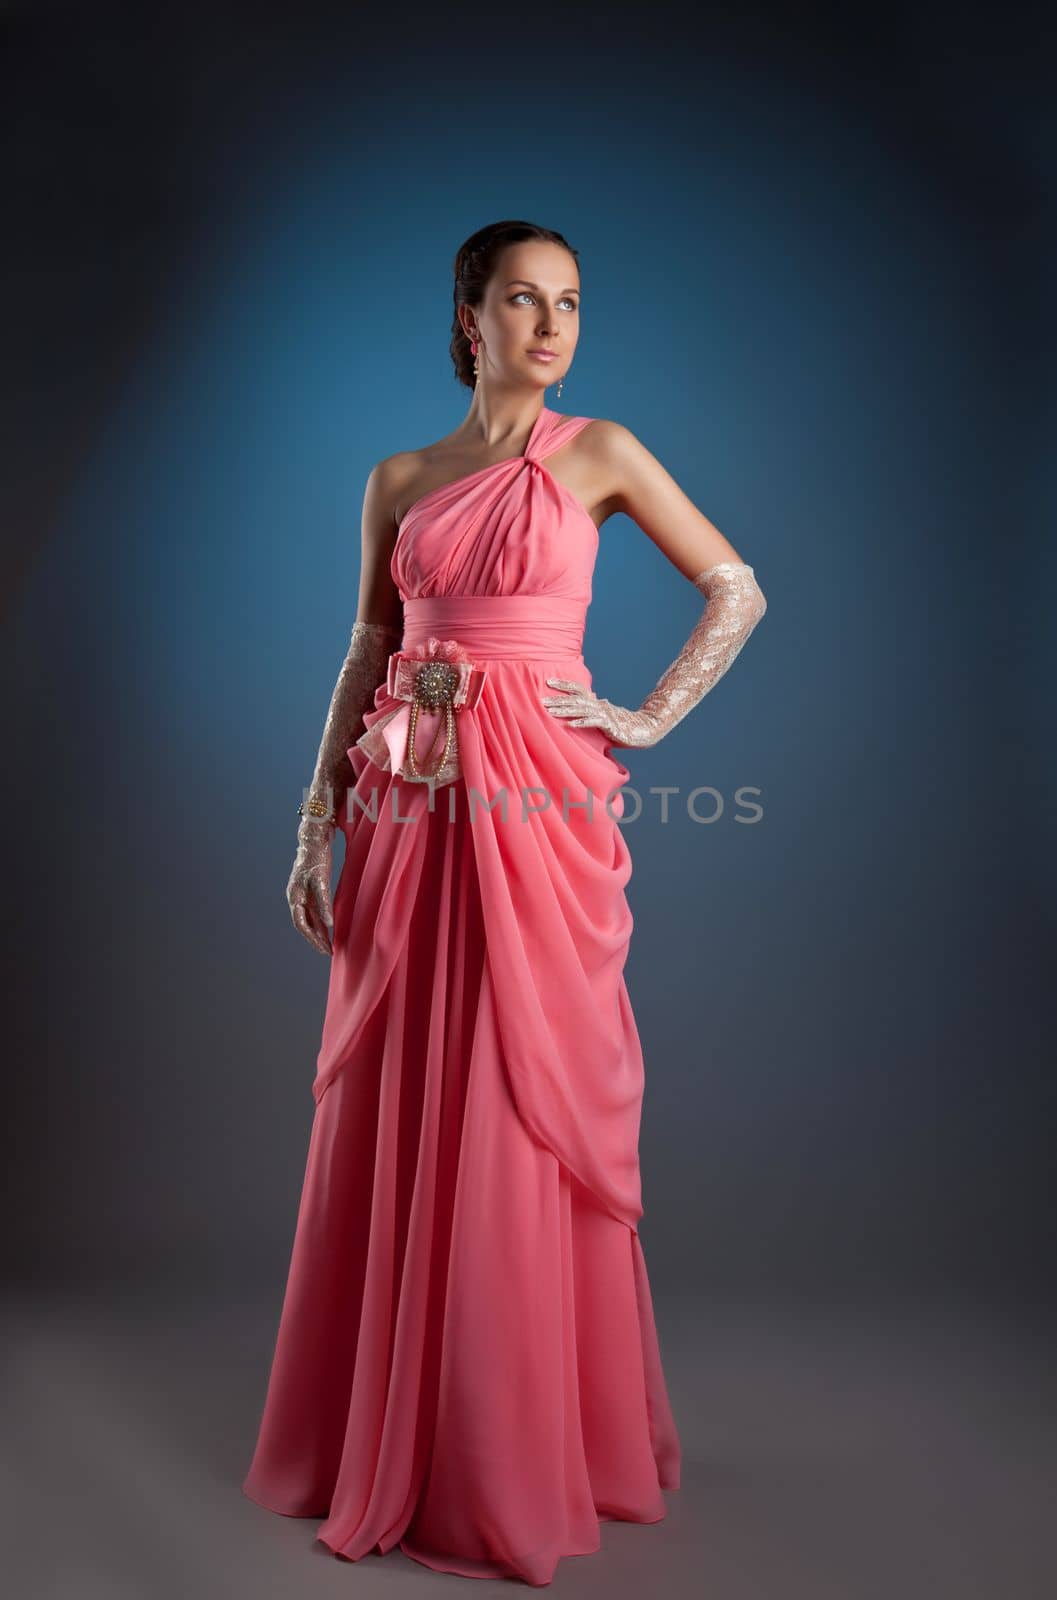 beauty woman posing in rose fashion portrait by rivertime